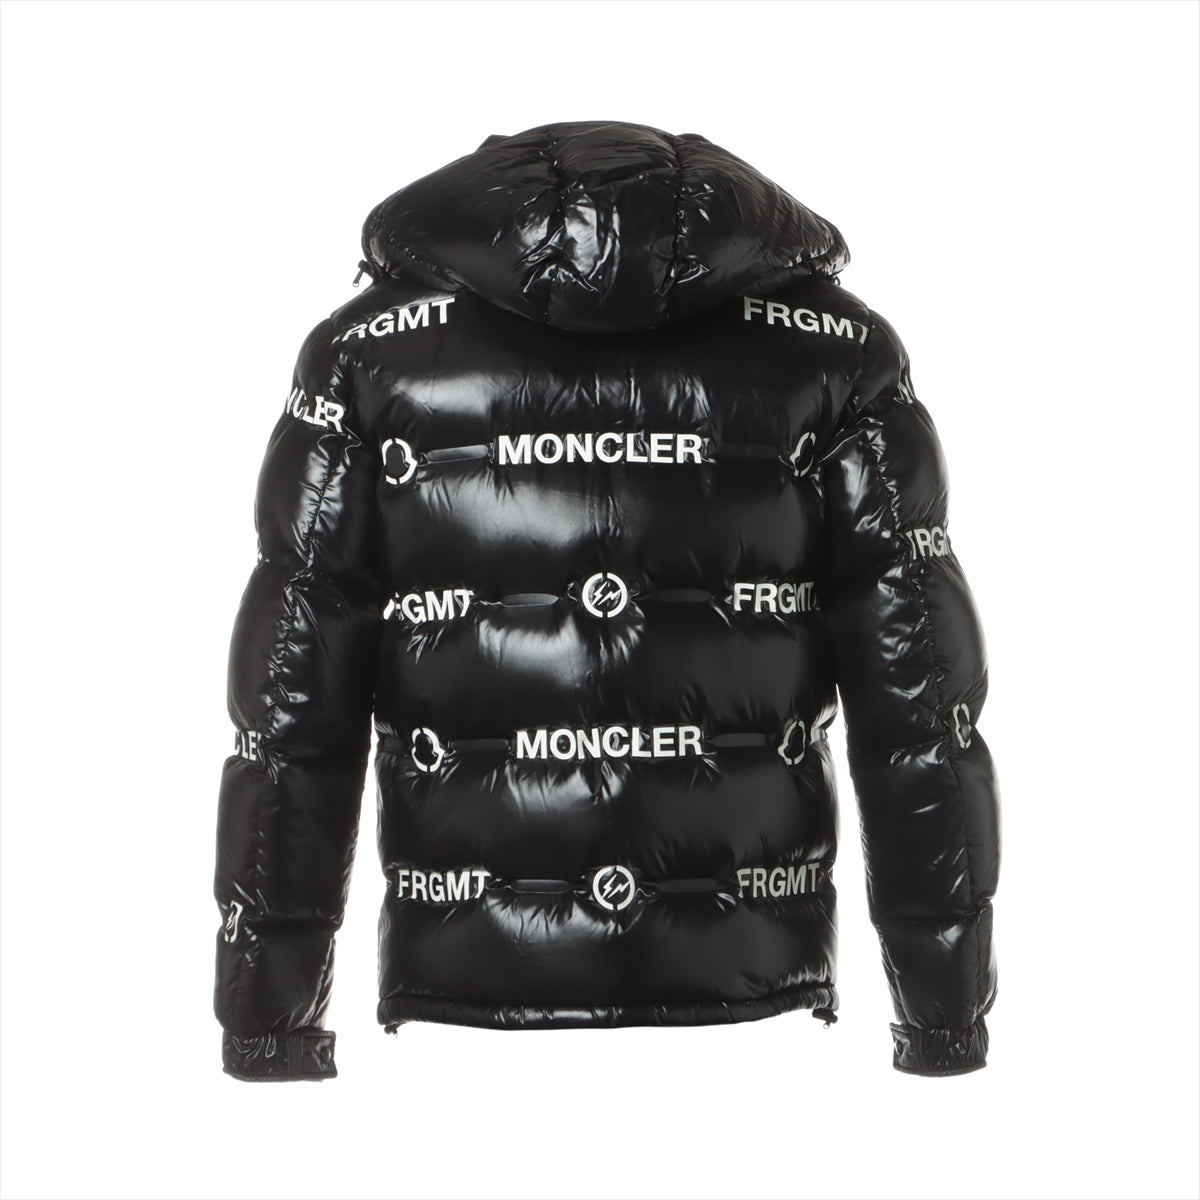 Moncler Genius Fragment MAYCONNE 20 years Nylon Down jacket 1 Men's Black